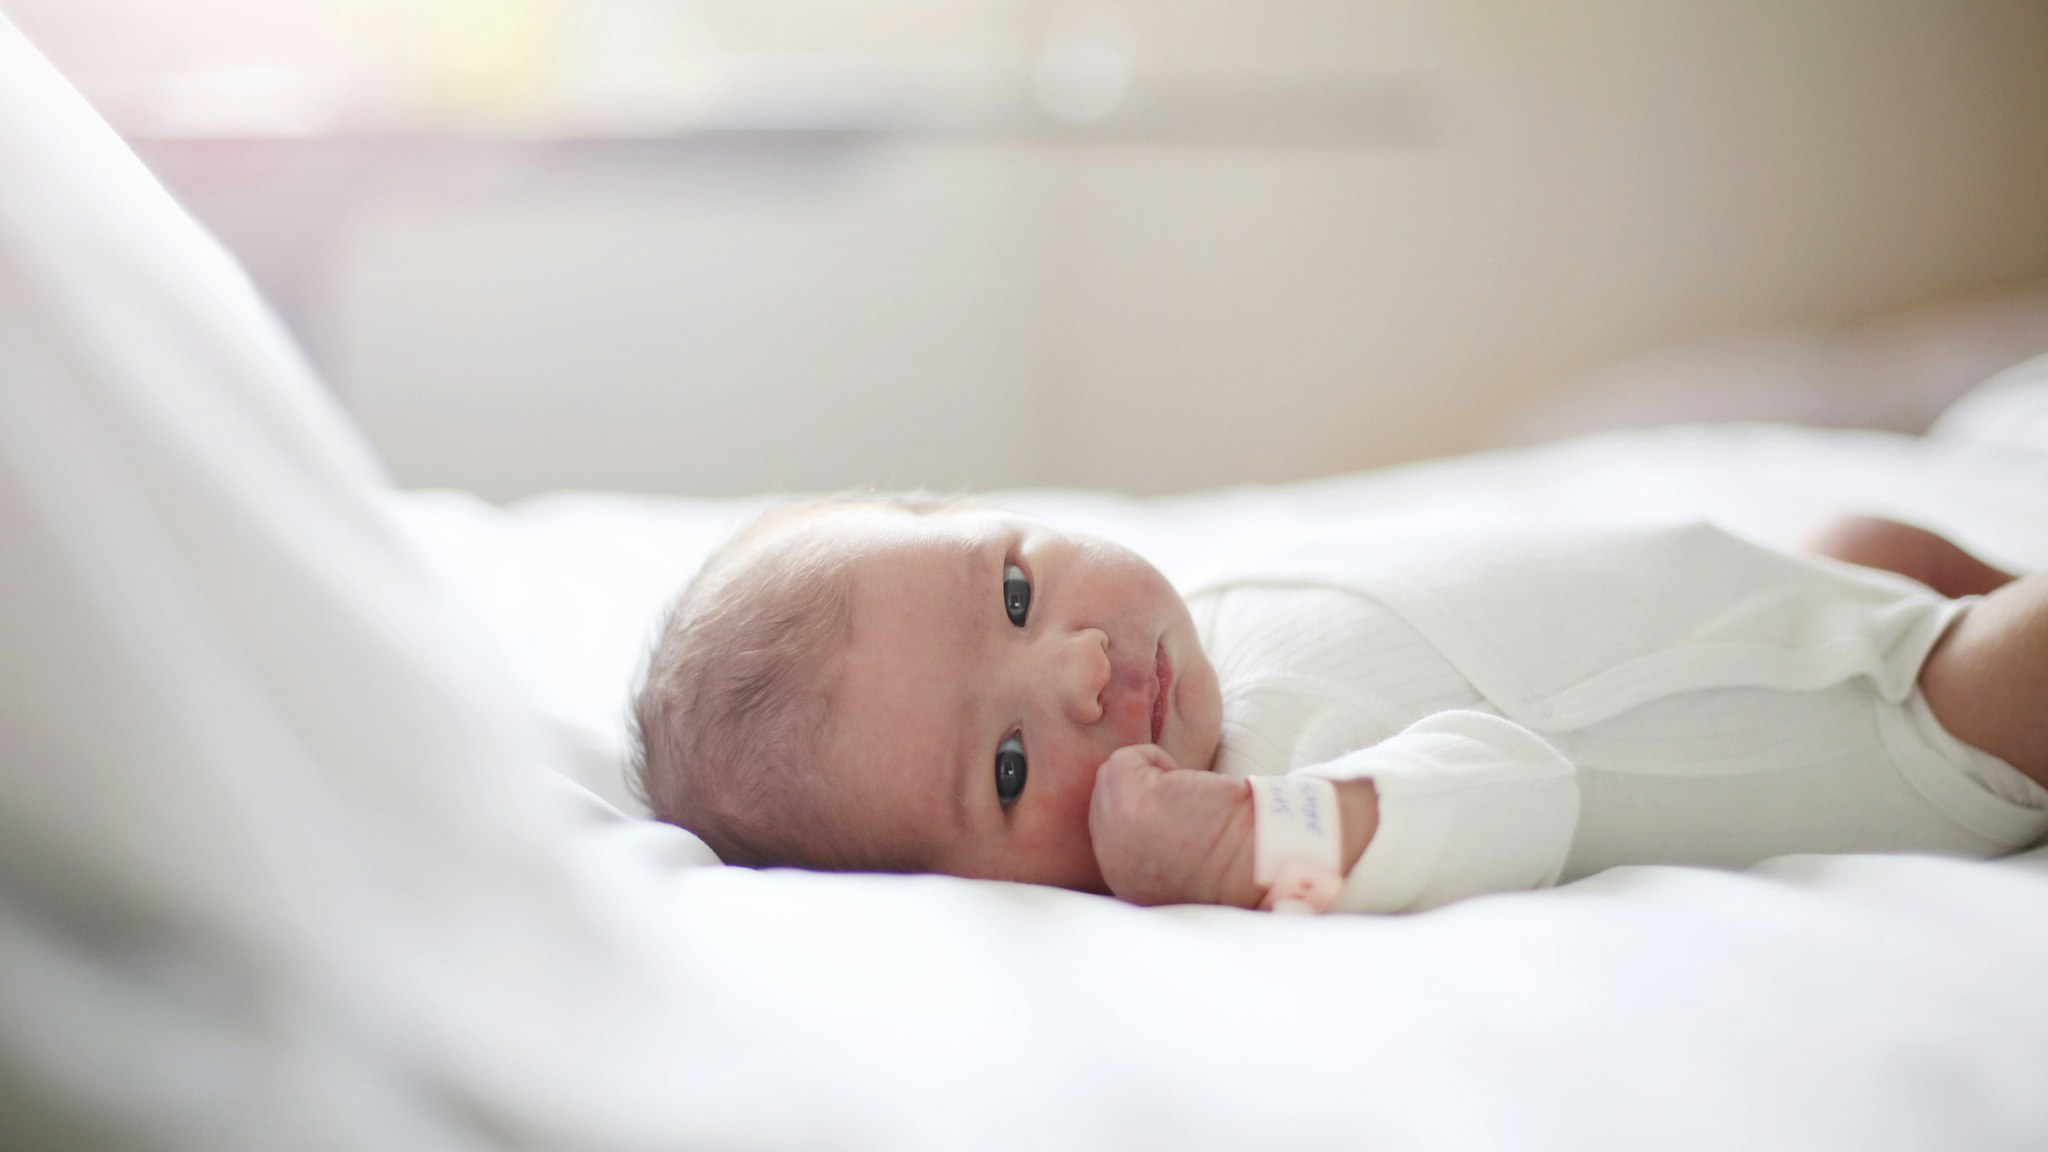 A newborn at the maternity ward - stock photo